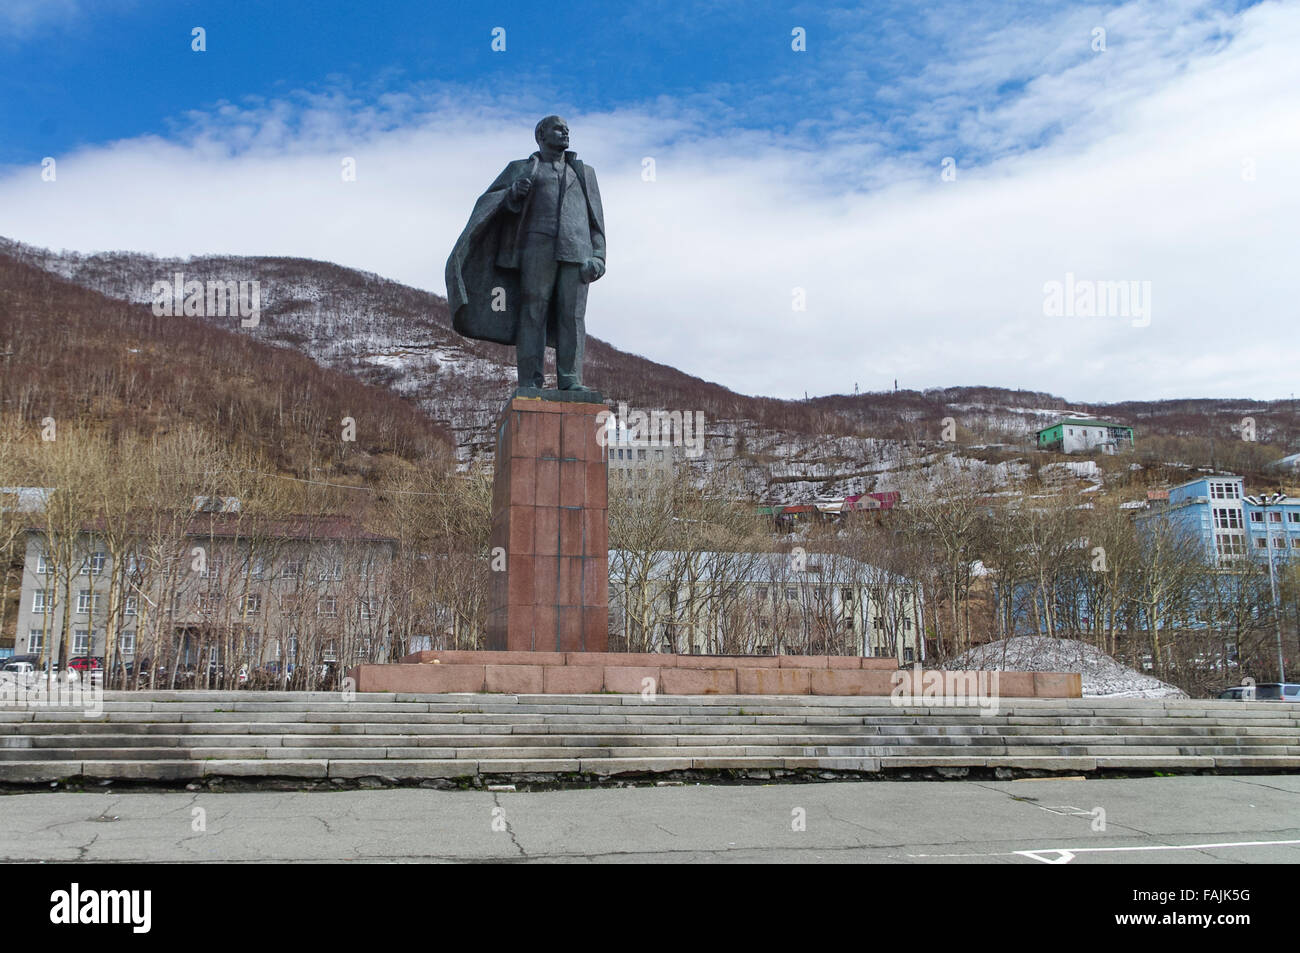 Statue of Vladimir Lenin on Lenin square in Petropavlovsk-Kamchatskiy, Kamchatka, Russian Federation. Stock Photo